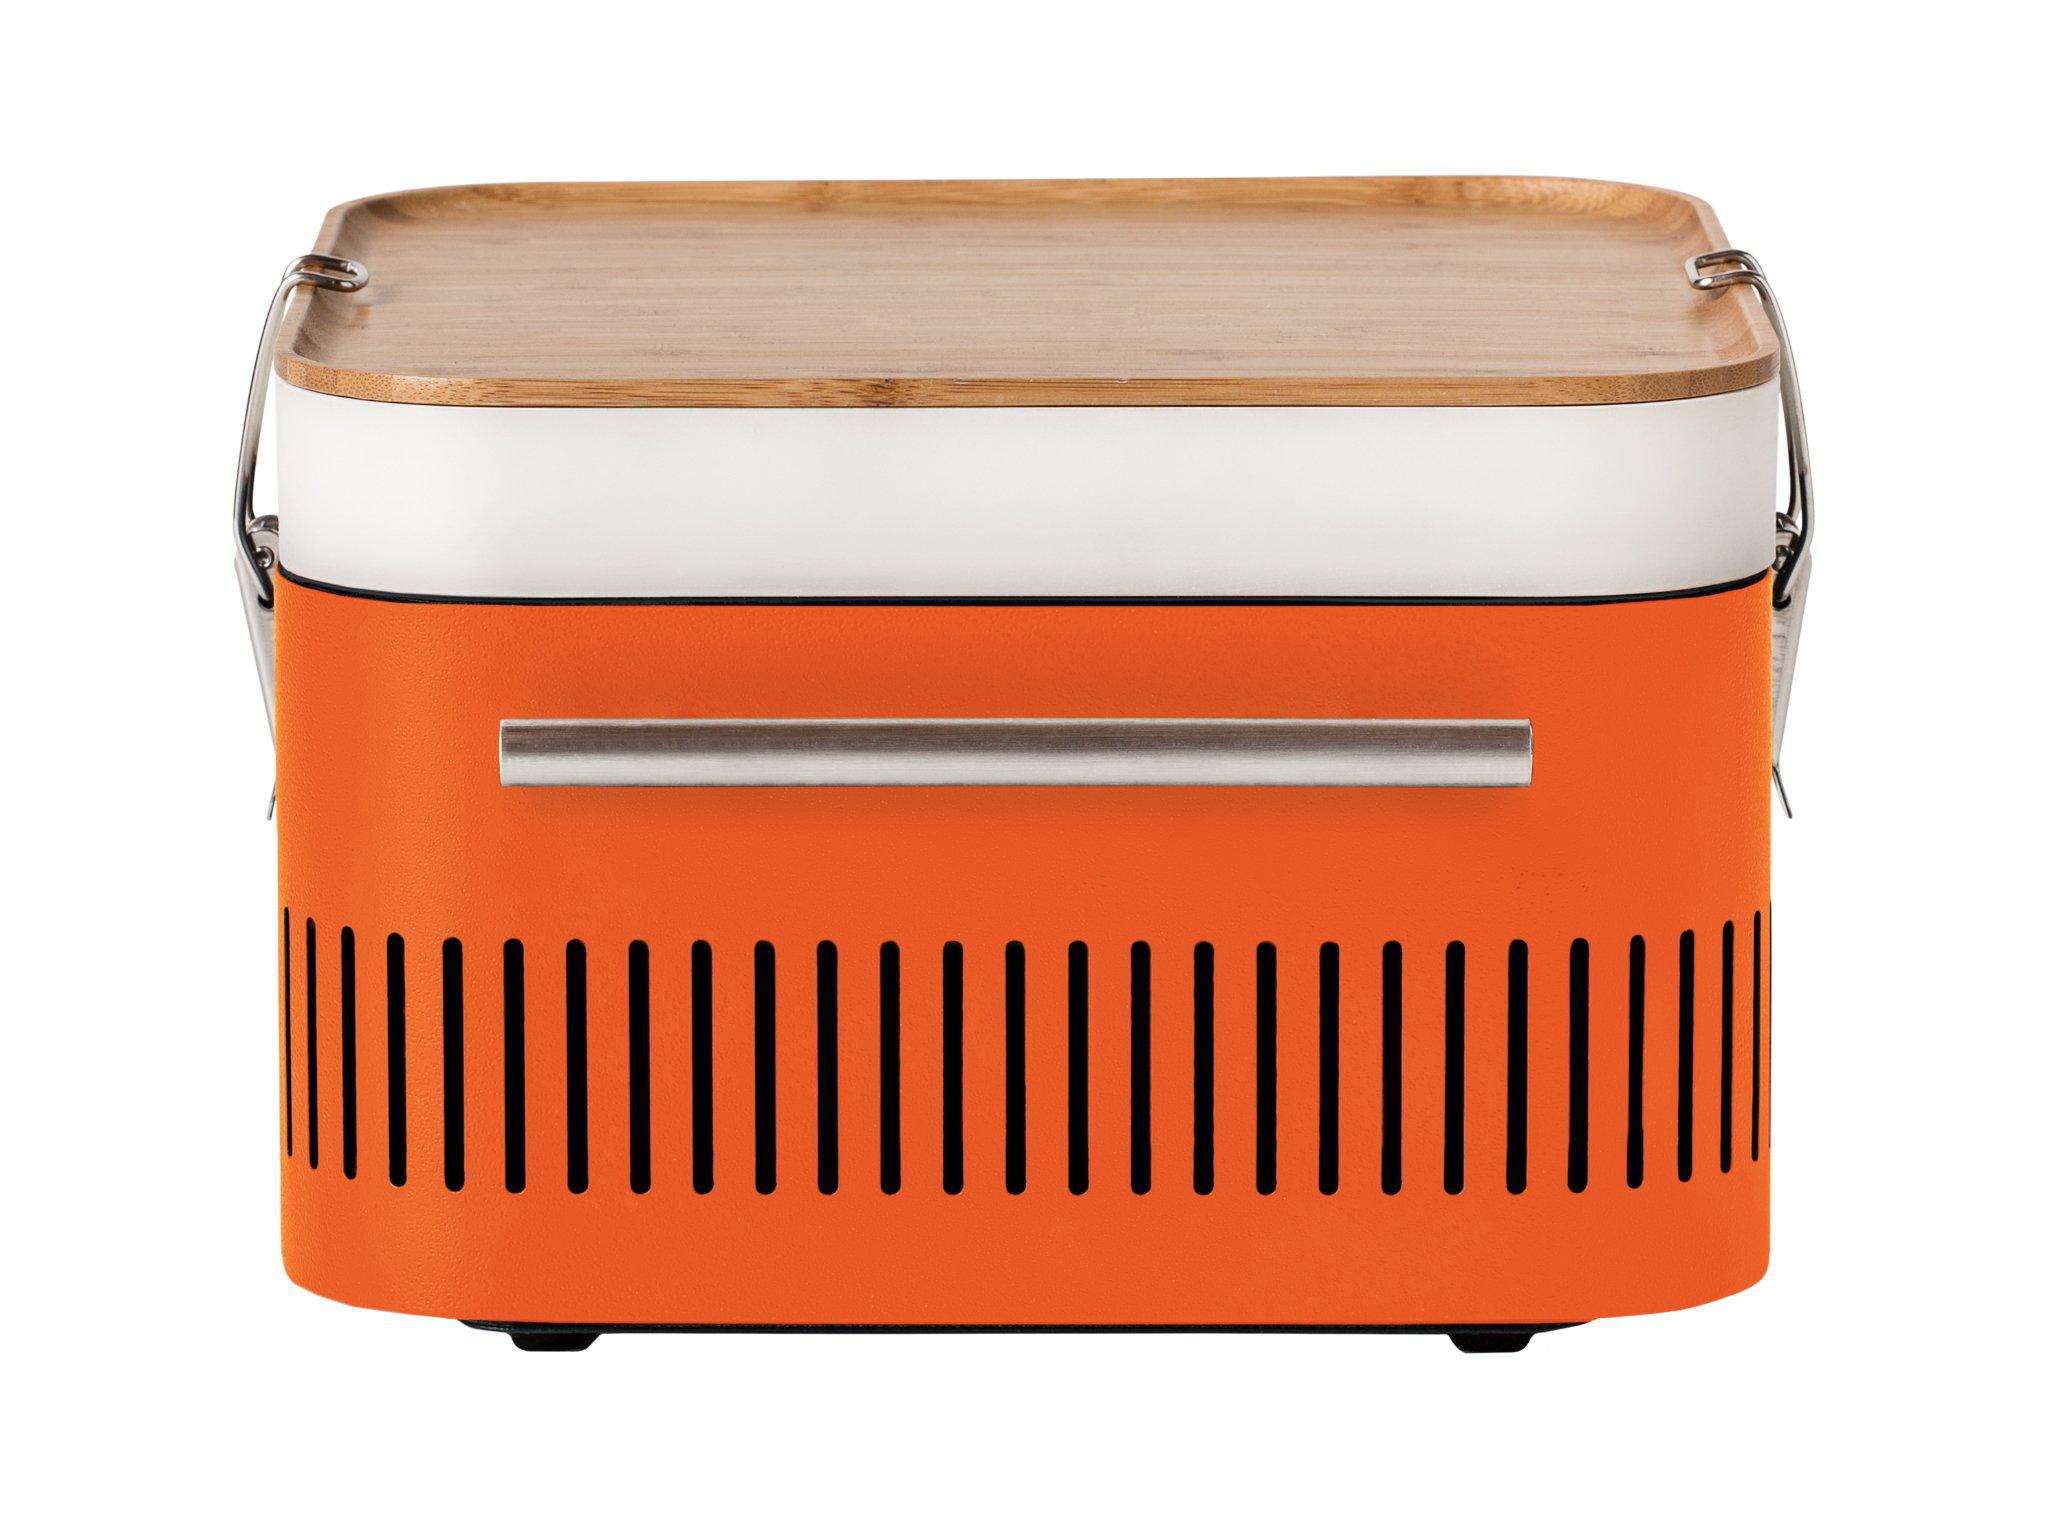 Everdure by Heston Blumenthal CUBE Portable Charcoal BBQ — Orange